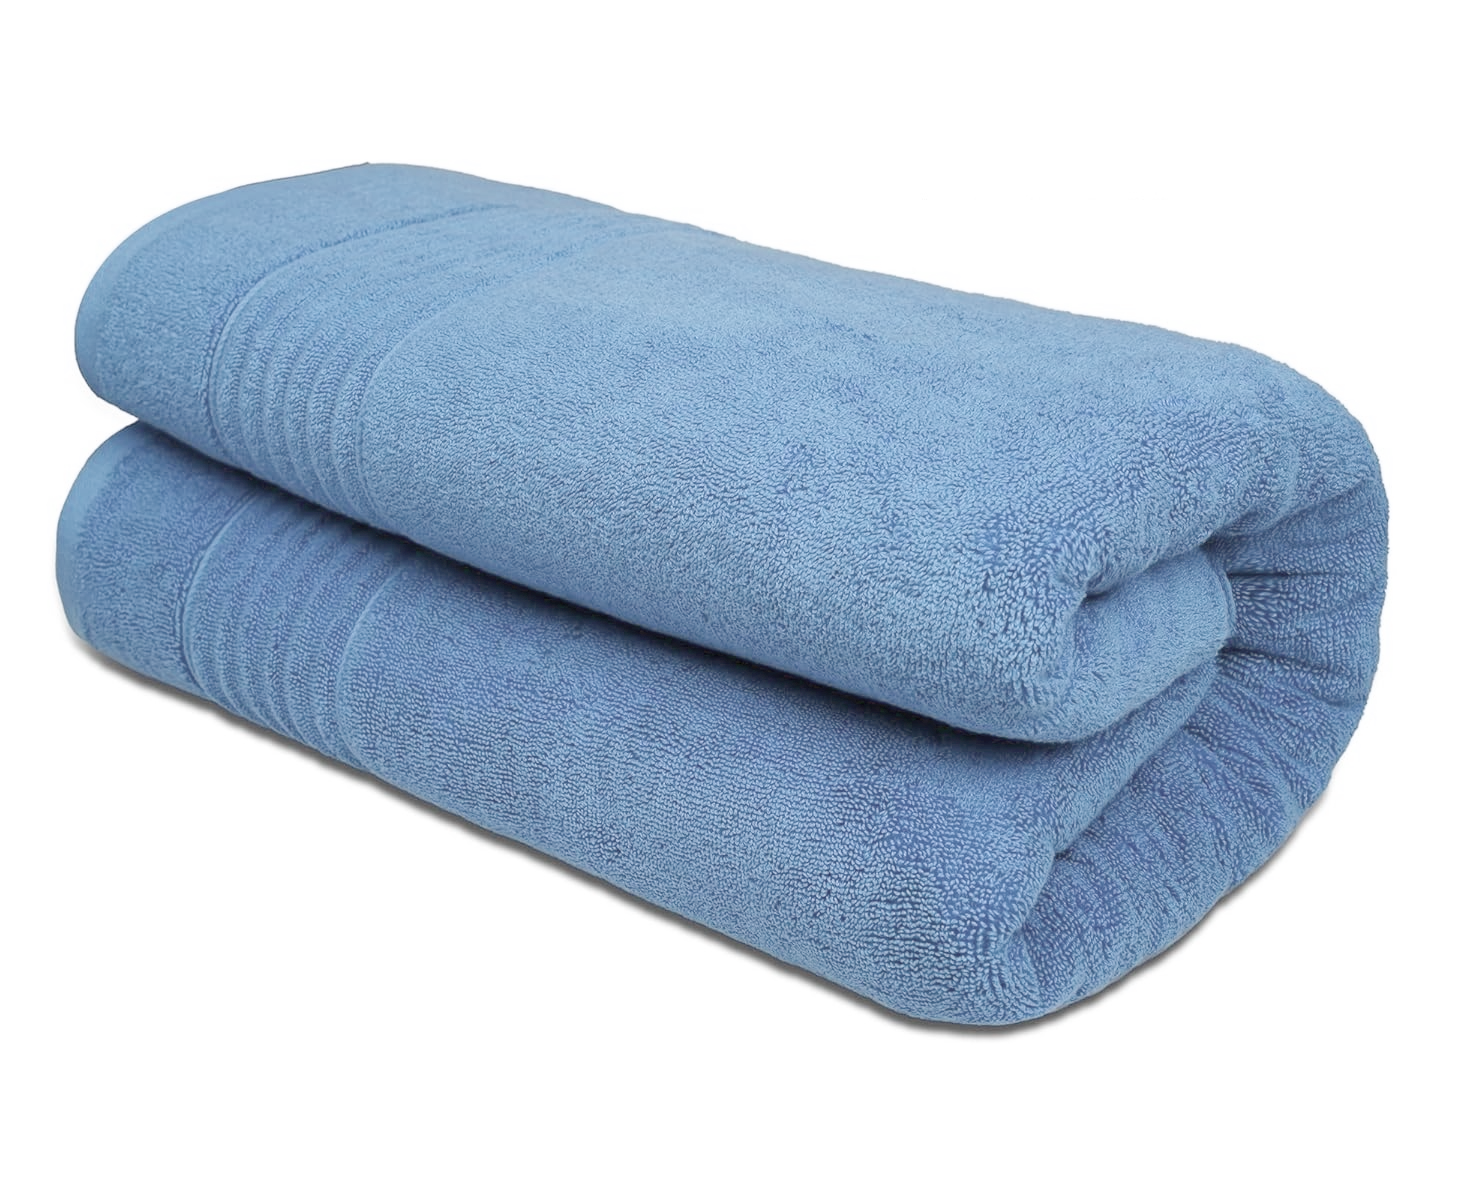 Extra Large Jumbo Bath Sheet Egyptian Cotton Towels 600GSM